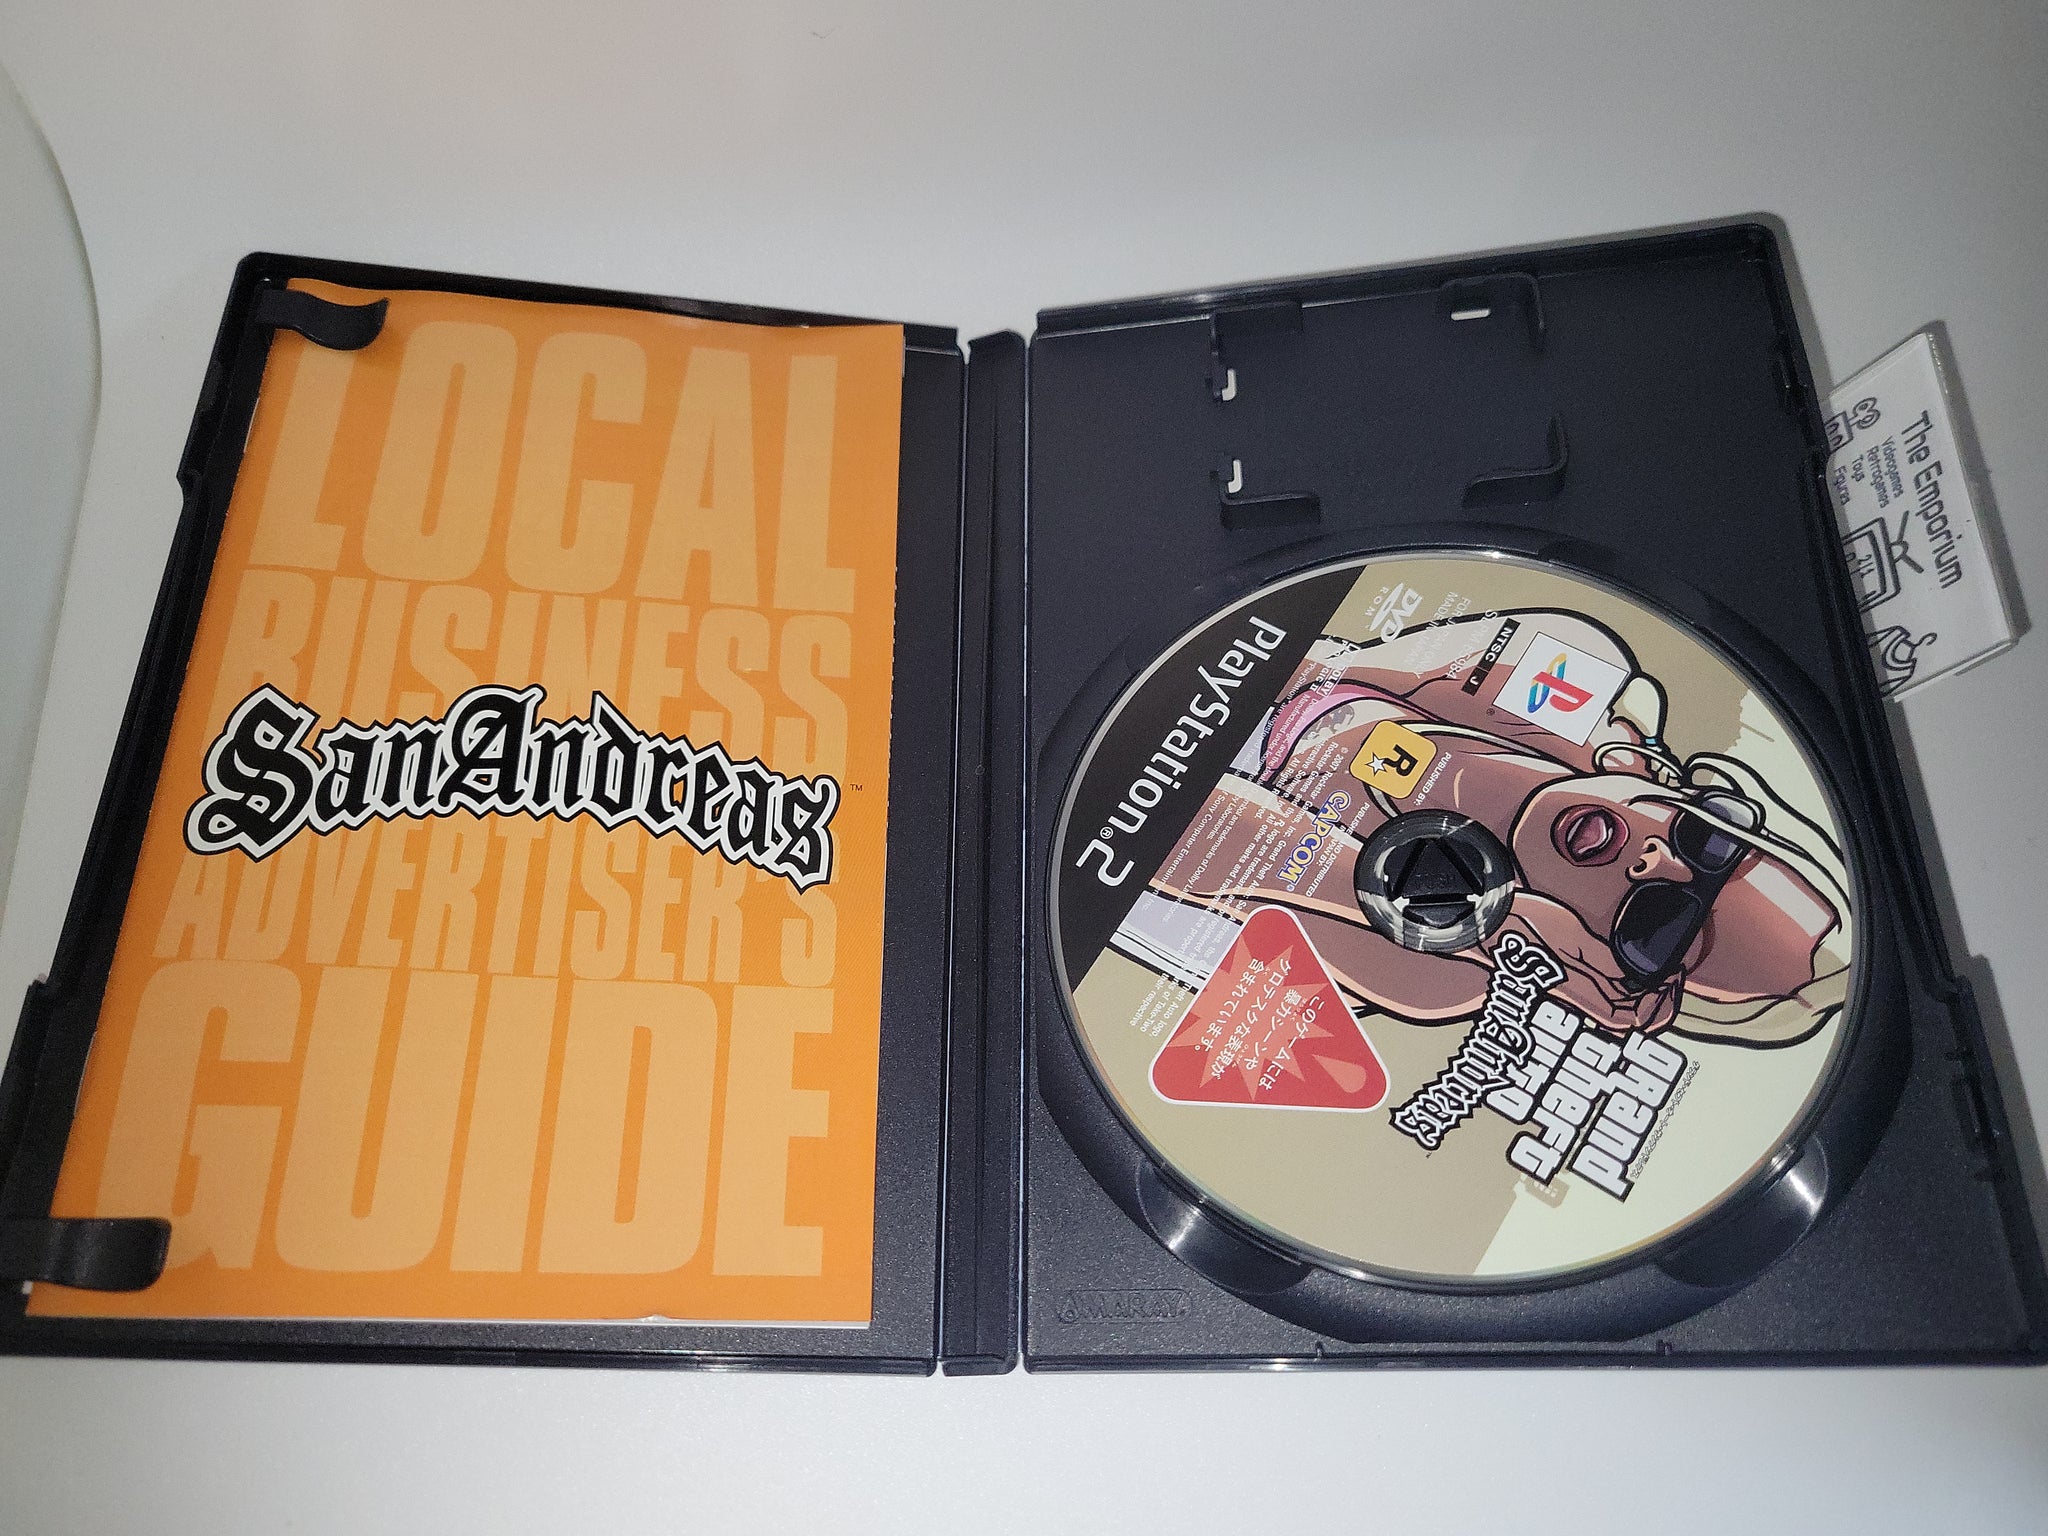 Grand Theft Auto San Andreas - Sony playstation 2 – The Emporium